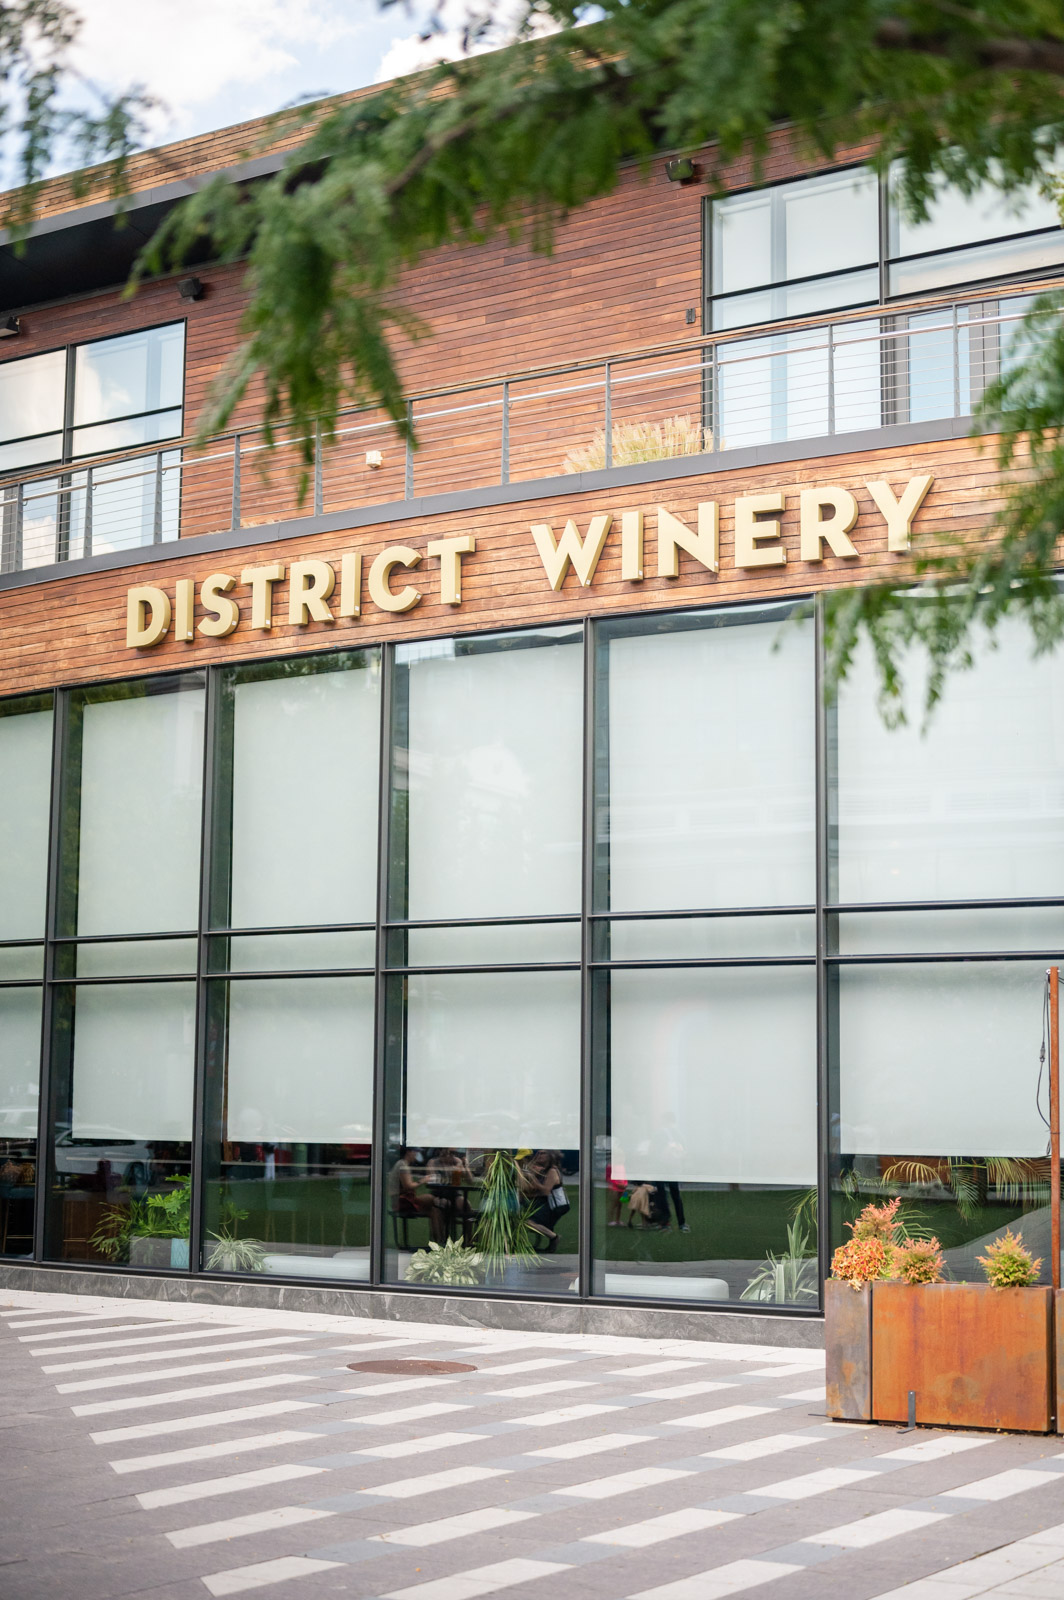 District Winery Washington DC